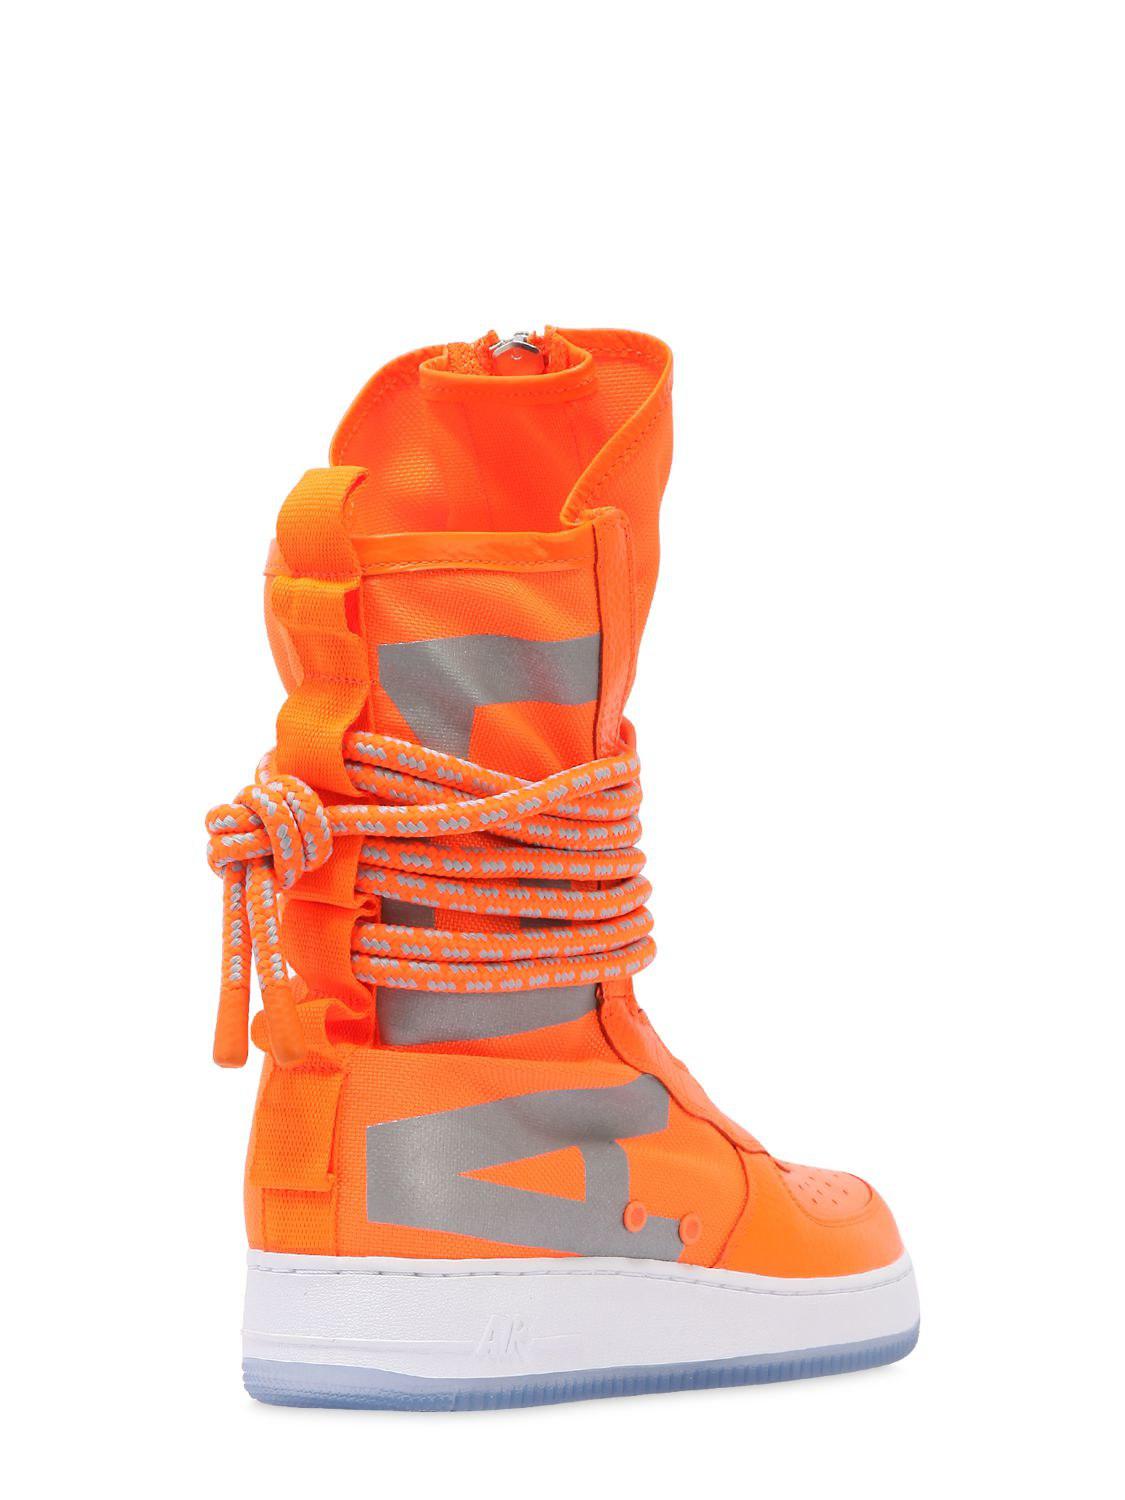 Nike Leather Sf Air Force 1 Sneaker Boots in Neon Orange (Orange) - Lyst